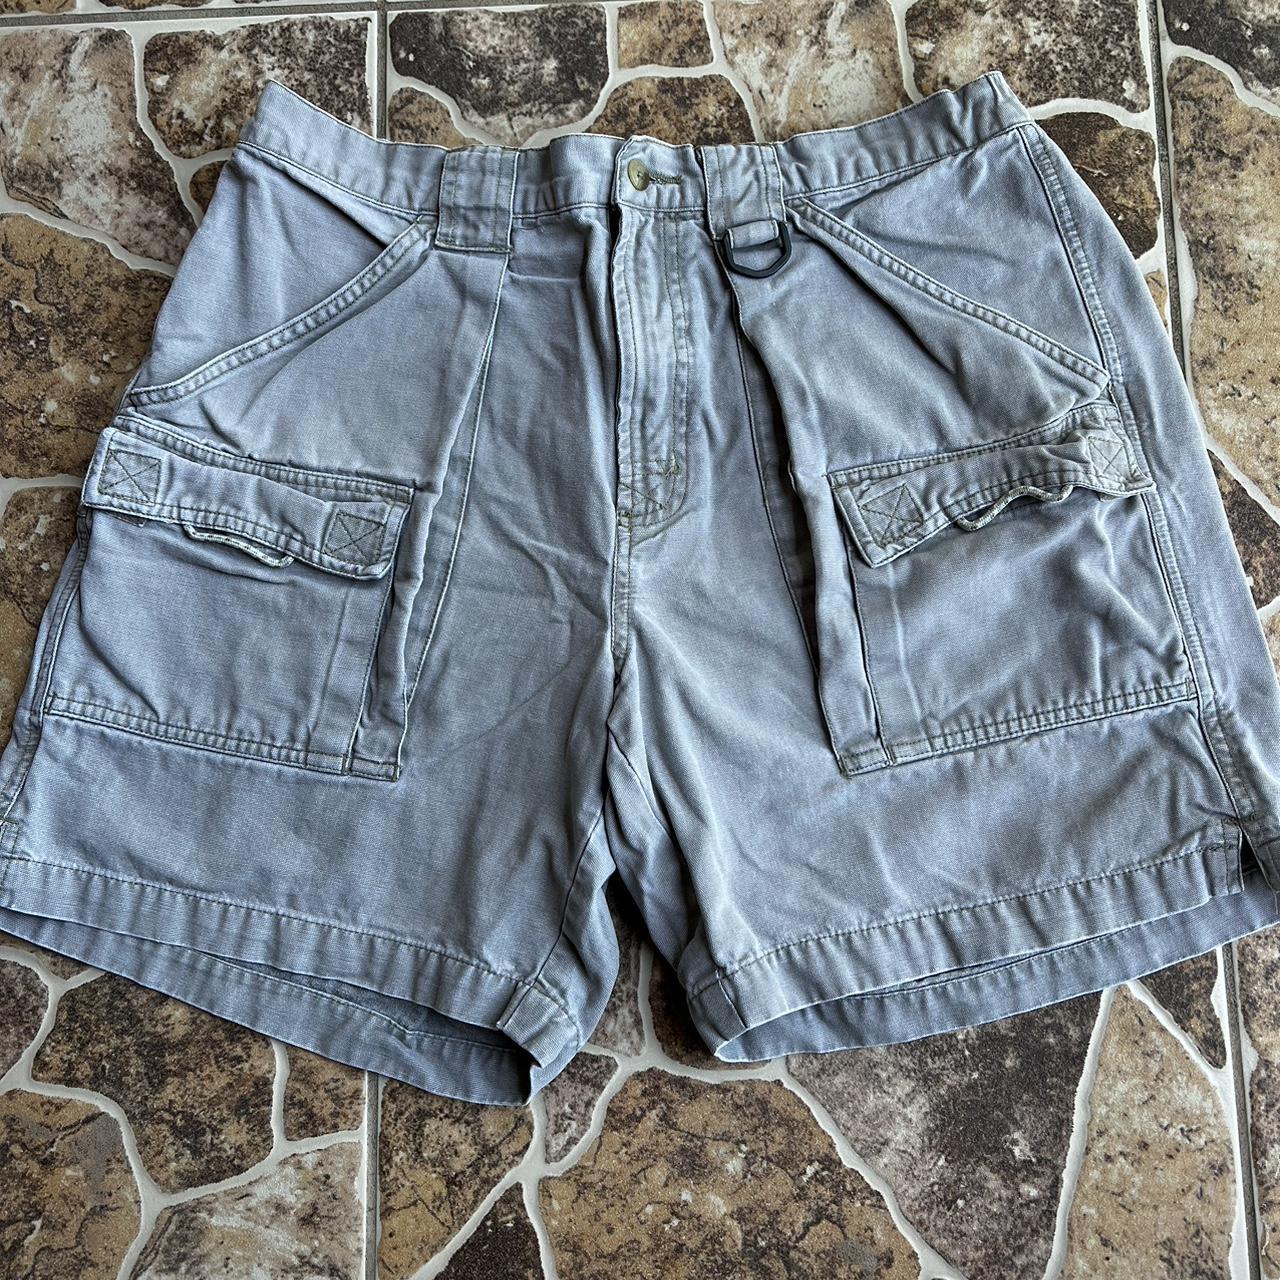 Columbia PFG multi pocket shorts